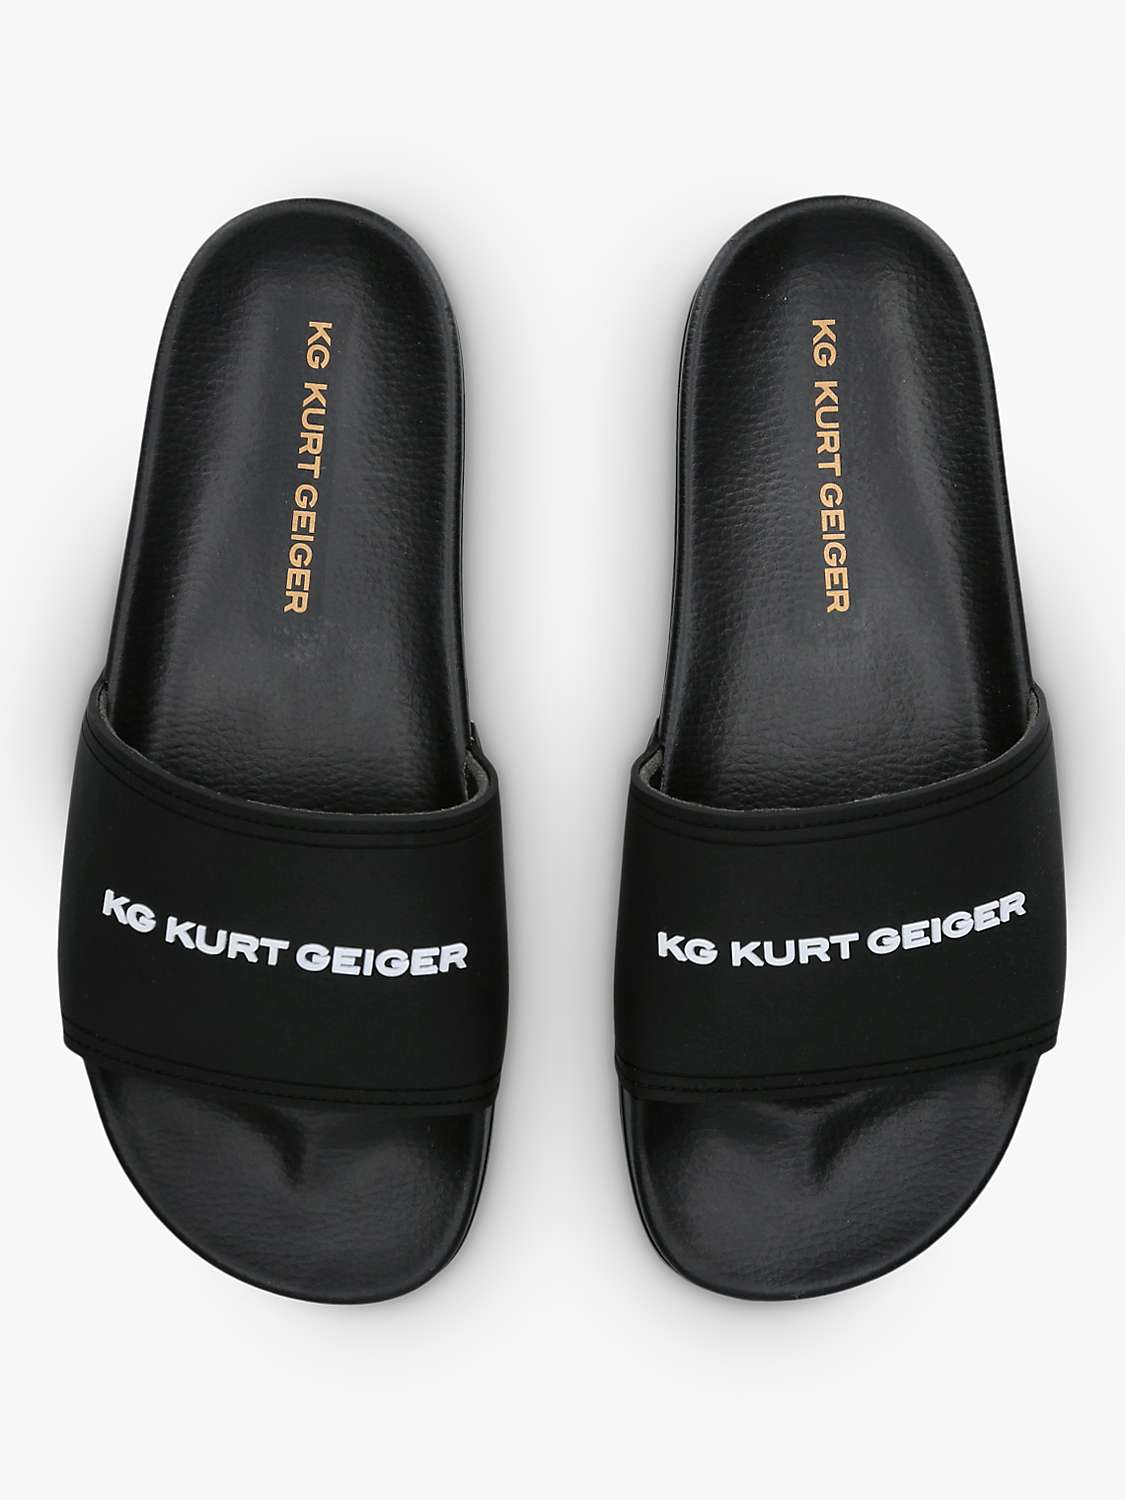 Buy KG Kurt Geiger Ibiza Slider Sandals Online at johnlewis.com